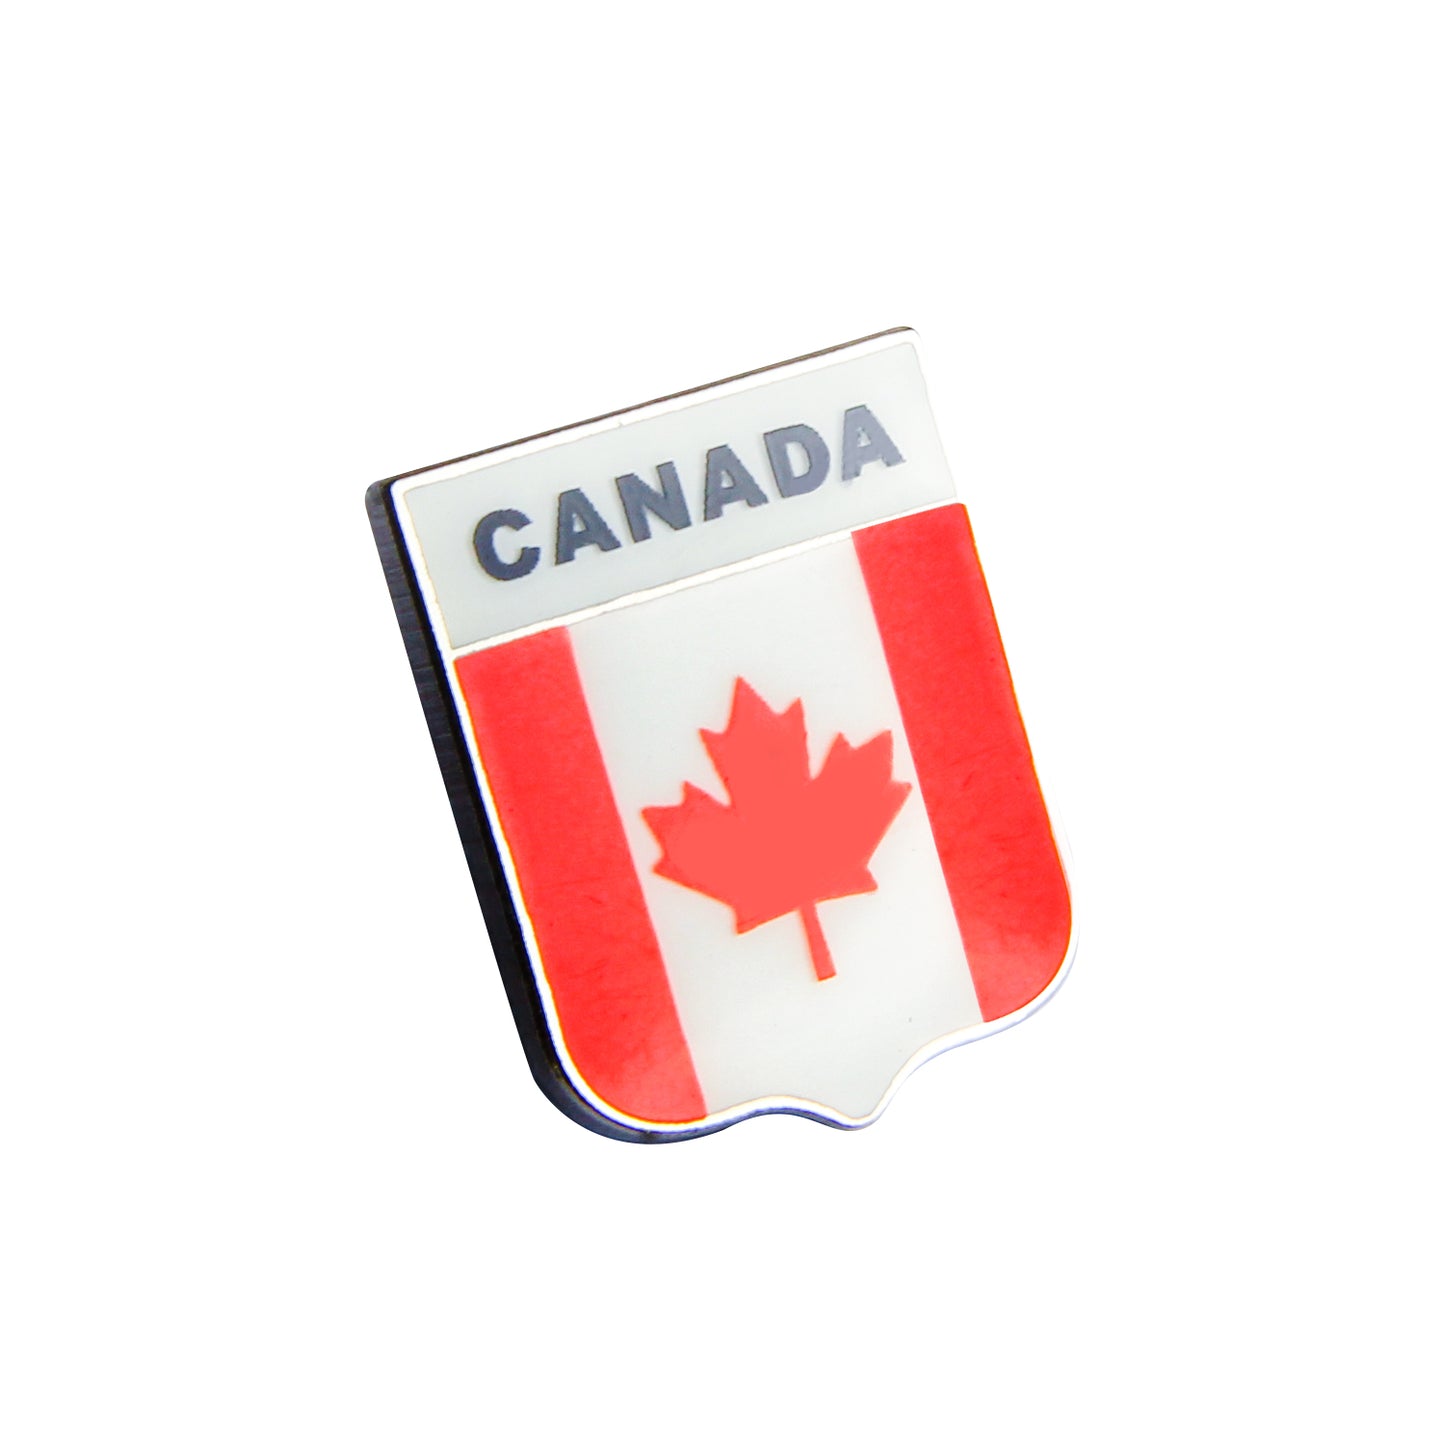 Canadian flag pin design